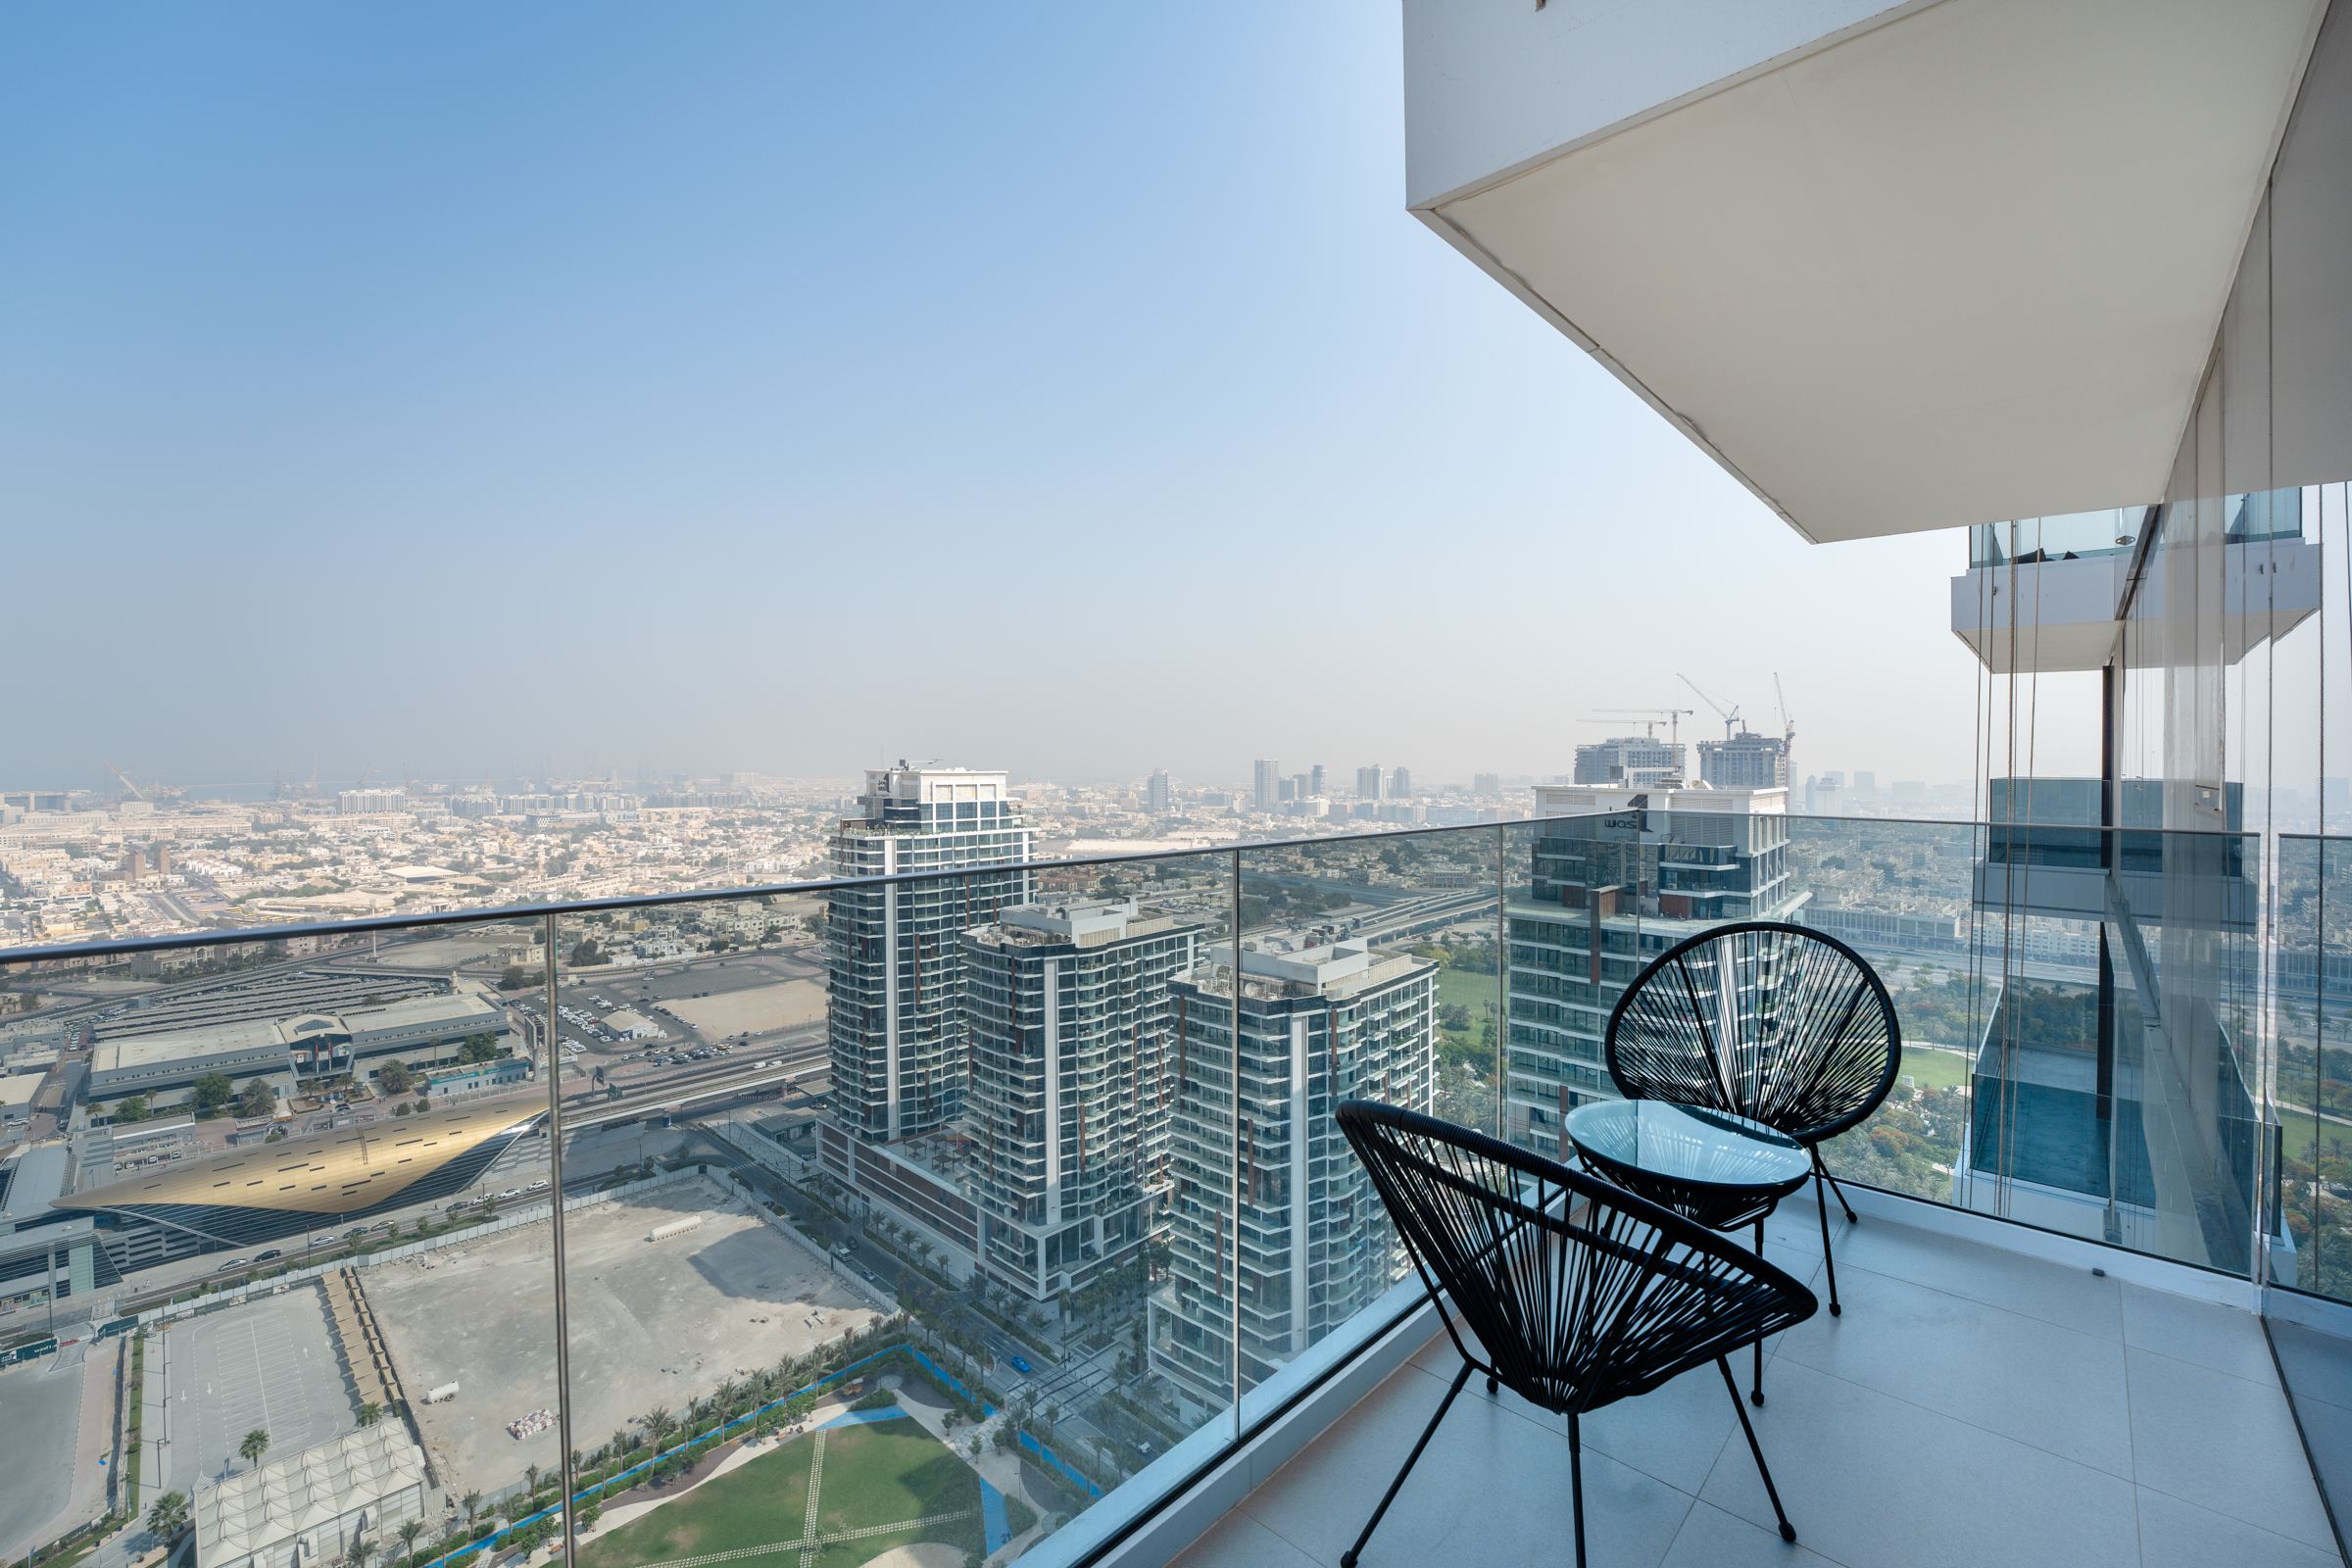 1 Residenze presso Wasl1 a Dubai, Emirati Arabi Uniti